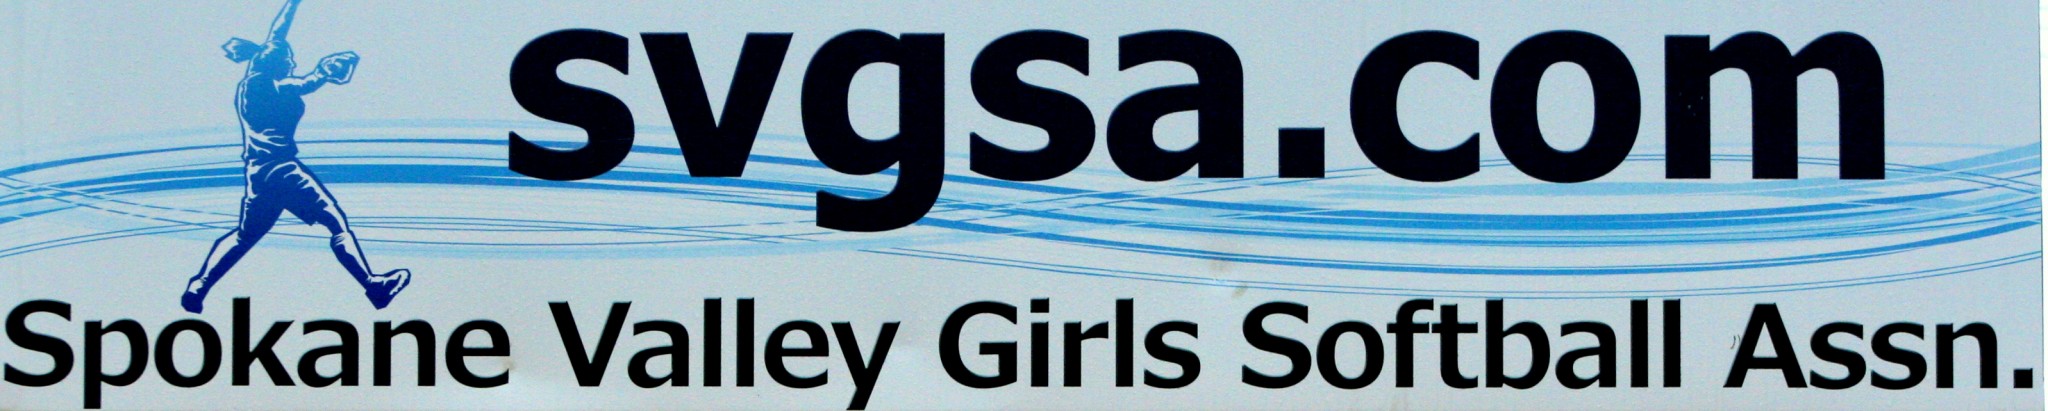 Spokane Valley Girls Softball Association